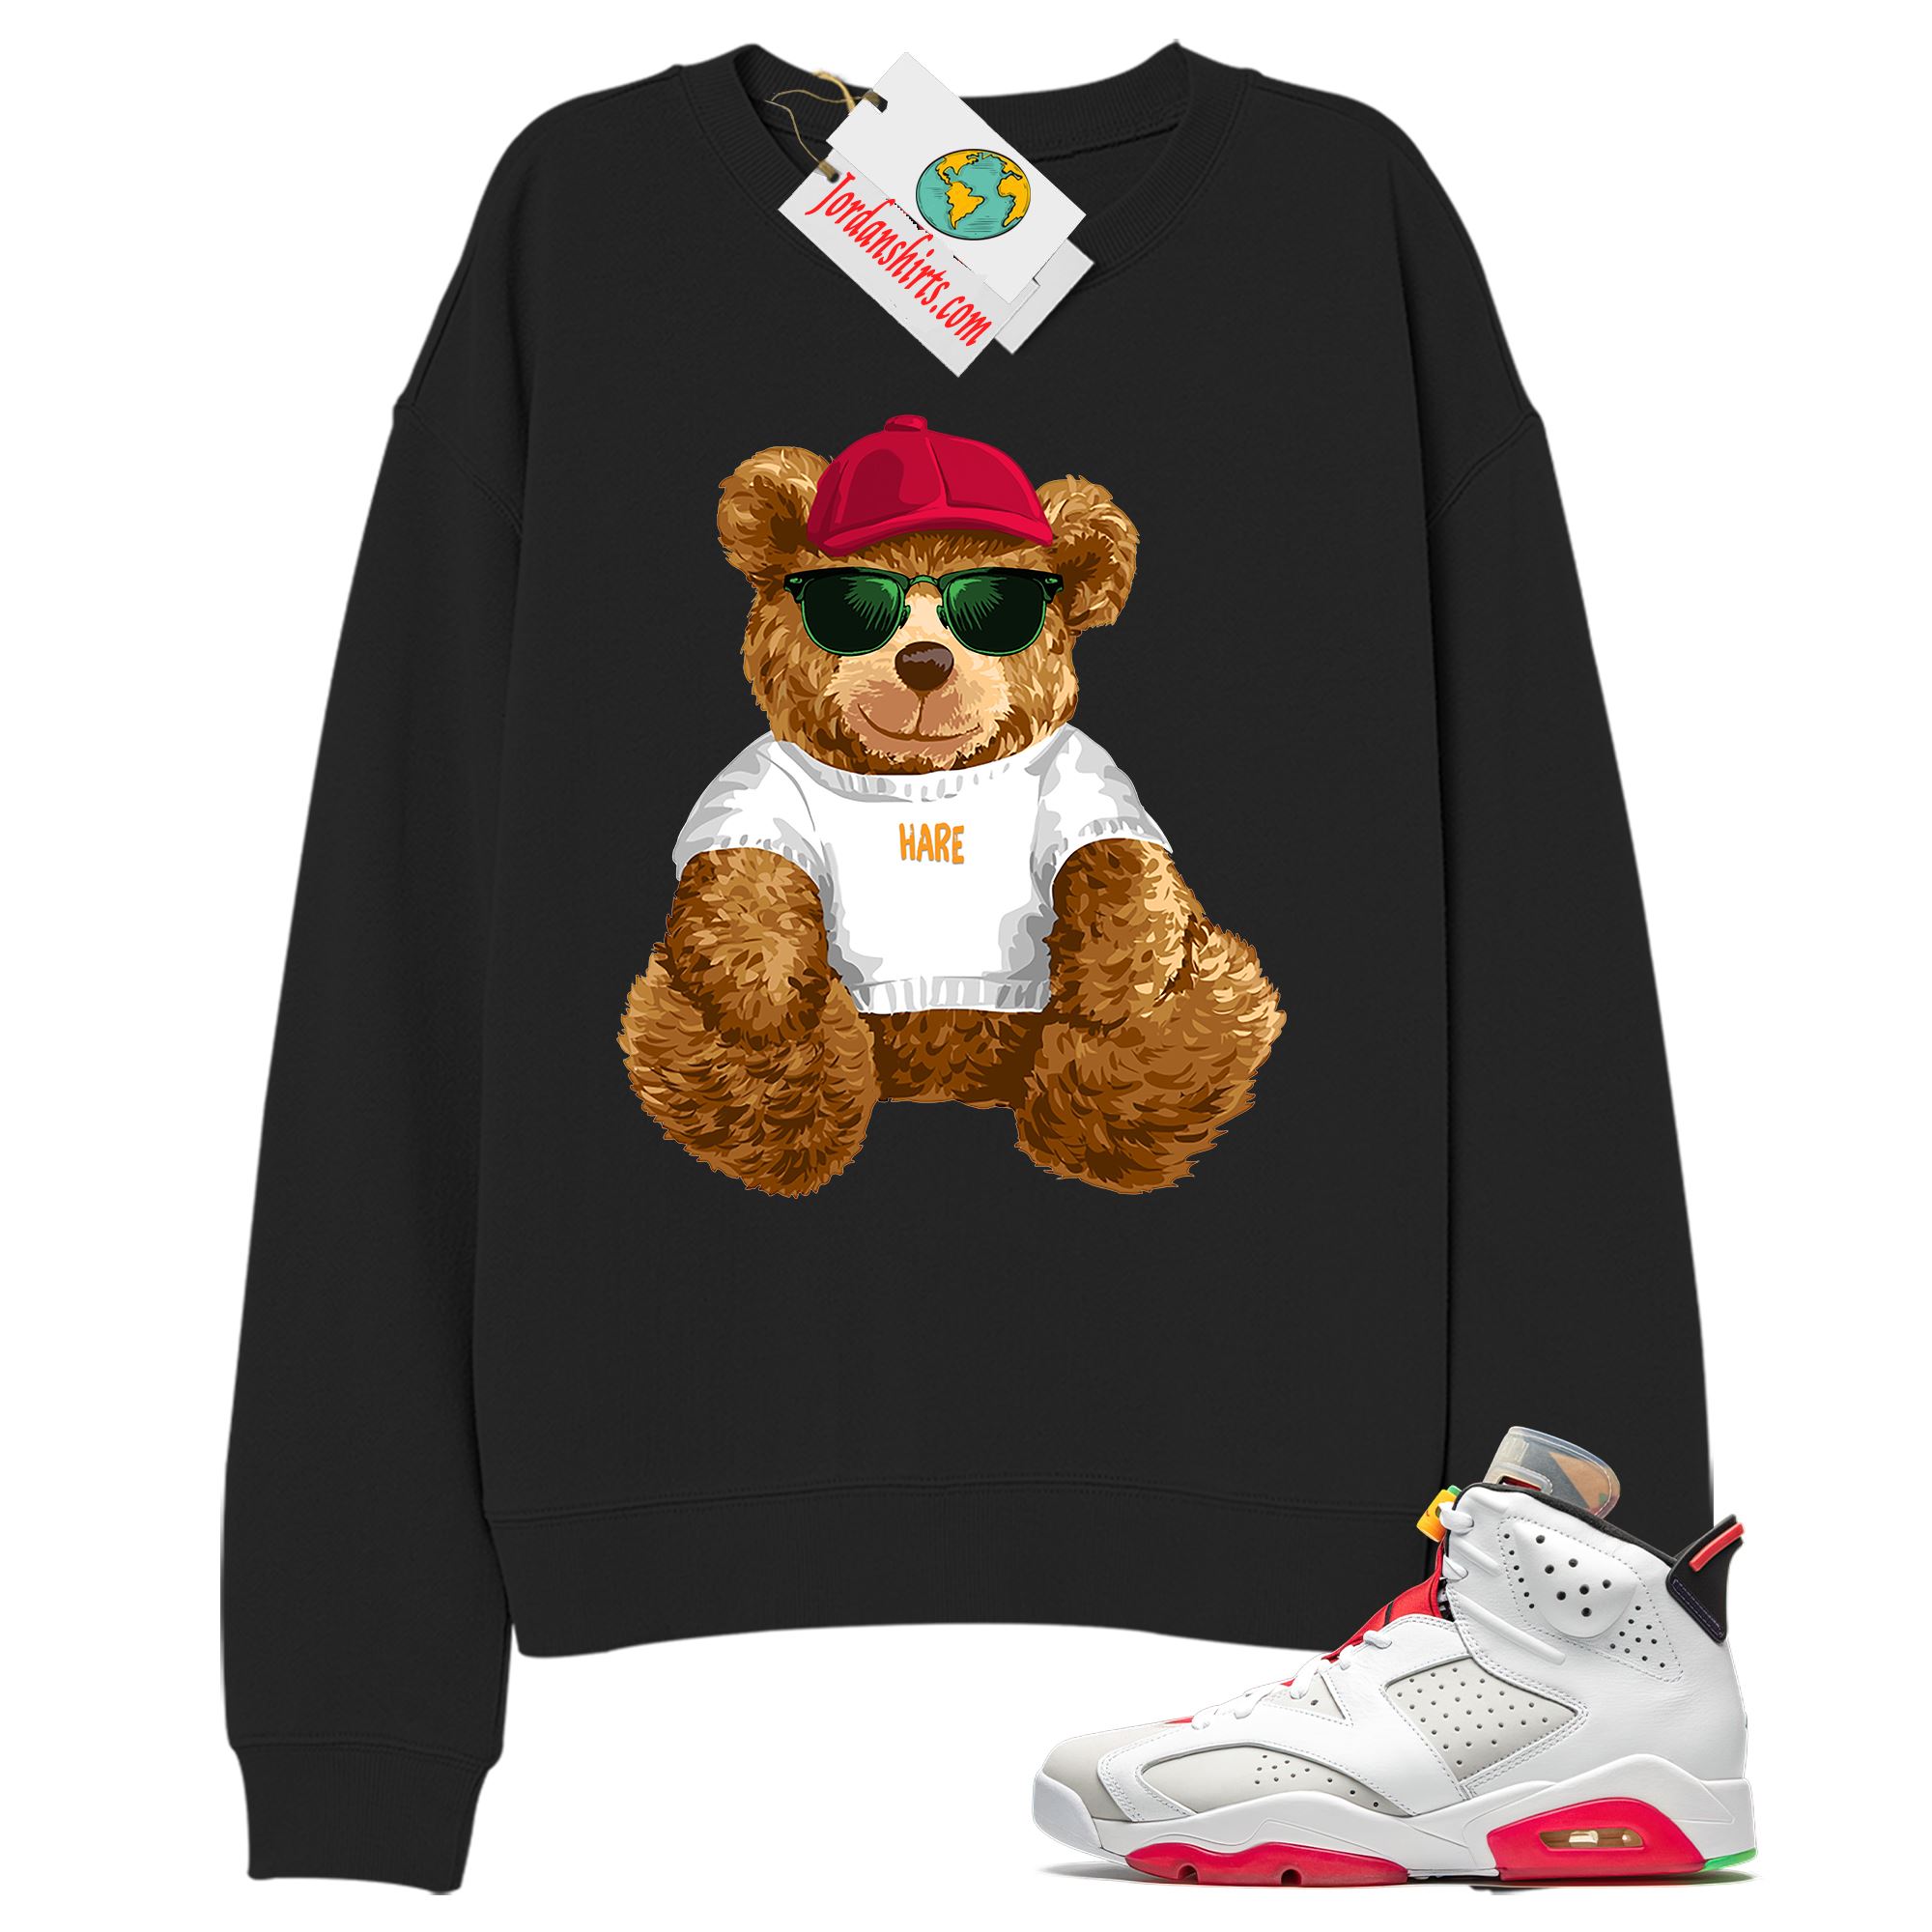 Jordan 6 Sweatshirt, Teddy Bear With Sunglasses Hat Black Sweatshirt Air Jordan 6 Hare 6s Size Up To 5xl